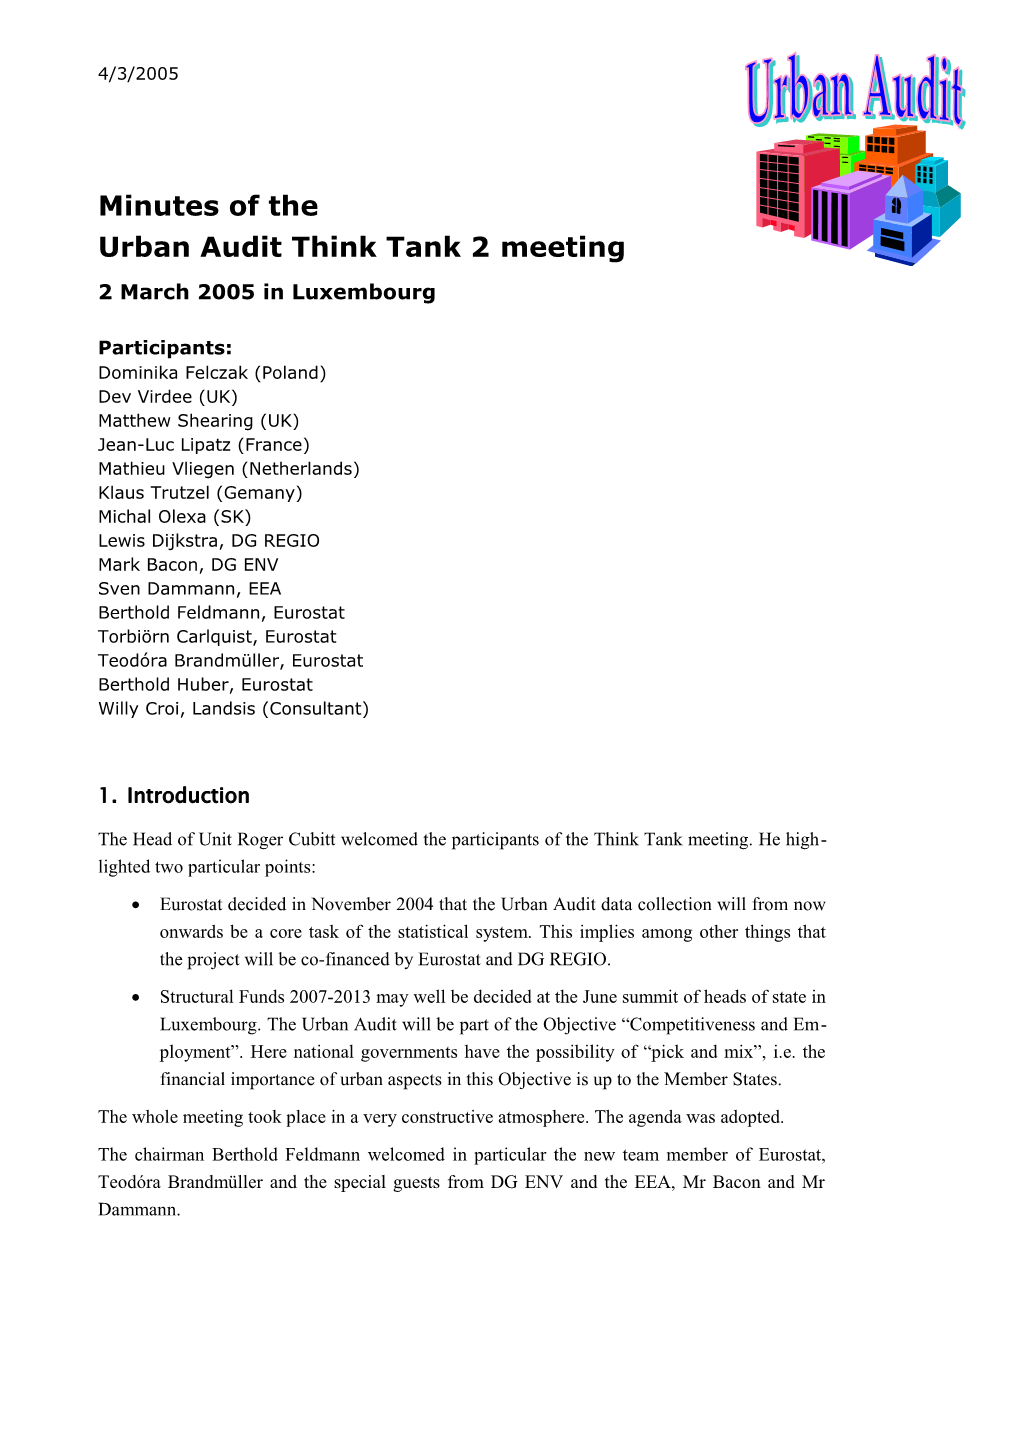 Minutes of UA Think Tank Meeting 2/3/2005